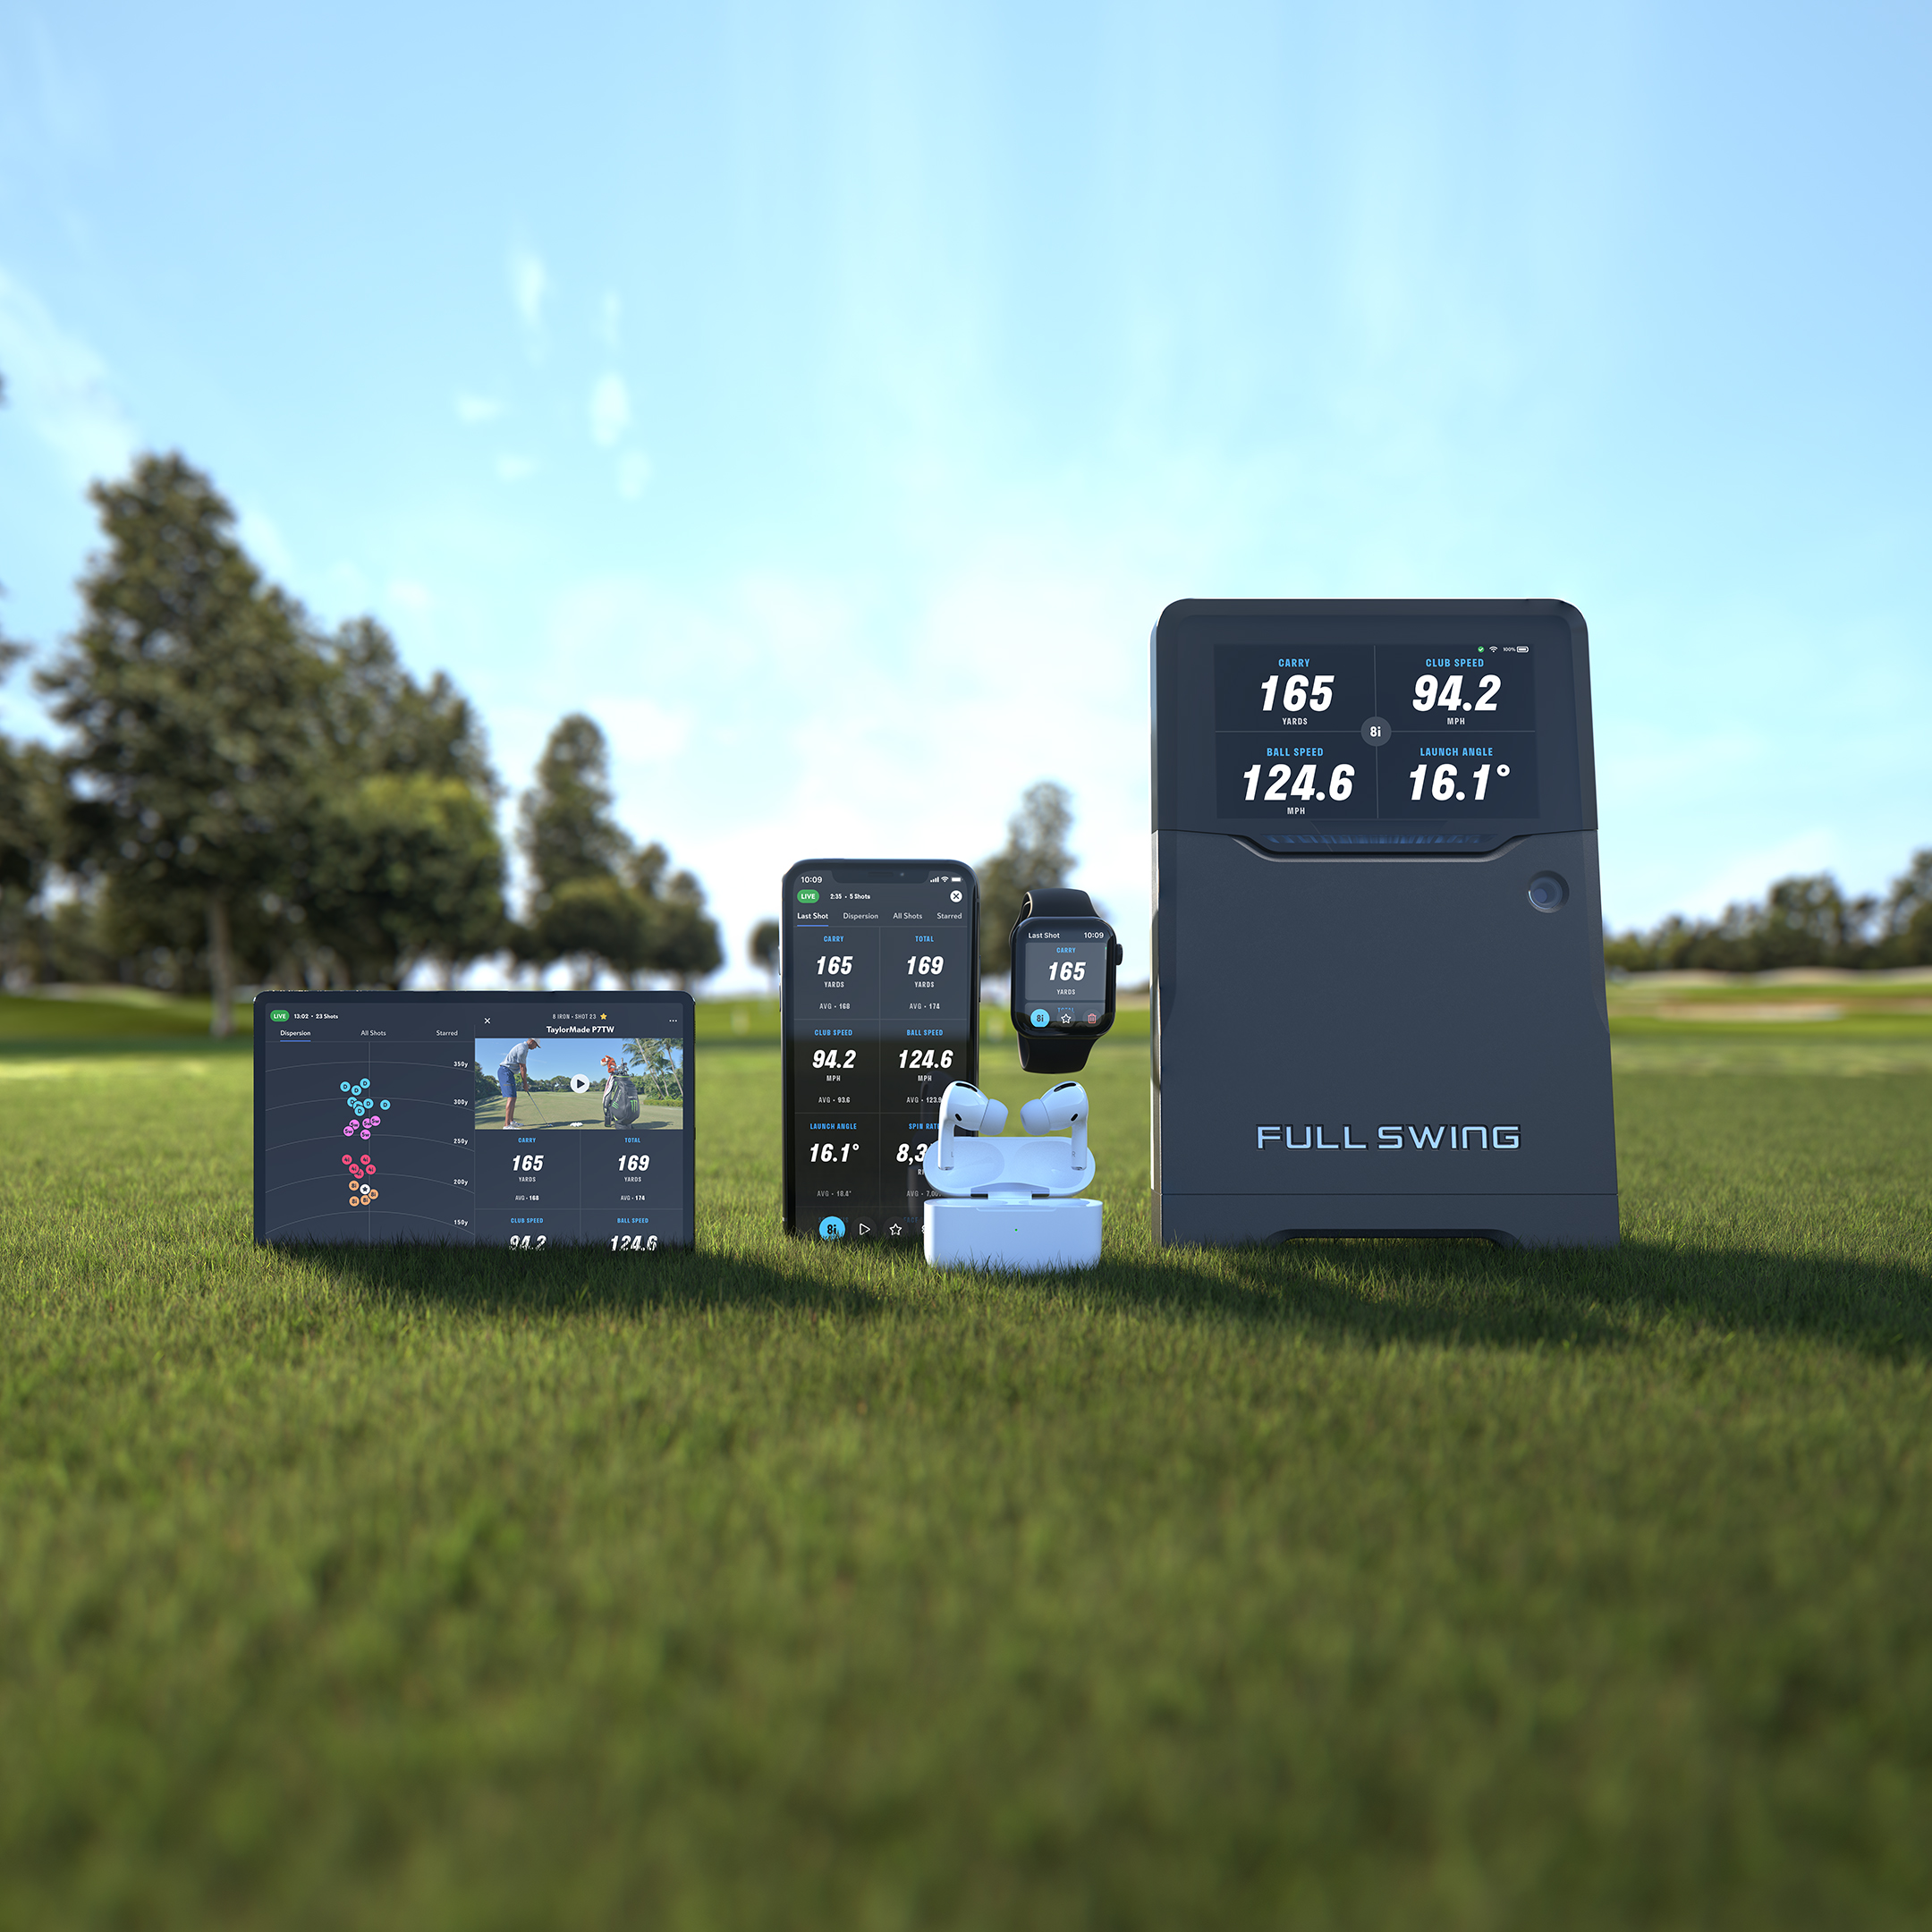 Full Swing KIT Launch Monitor and Golf Simulator